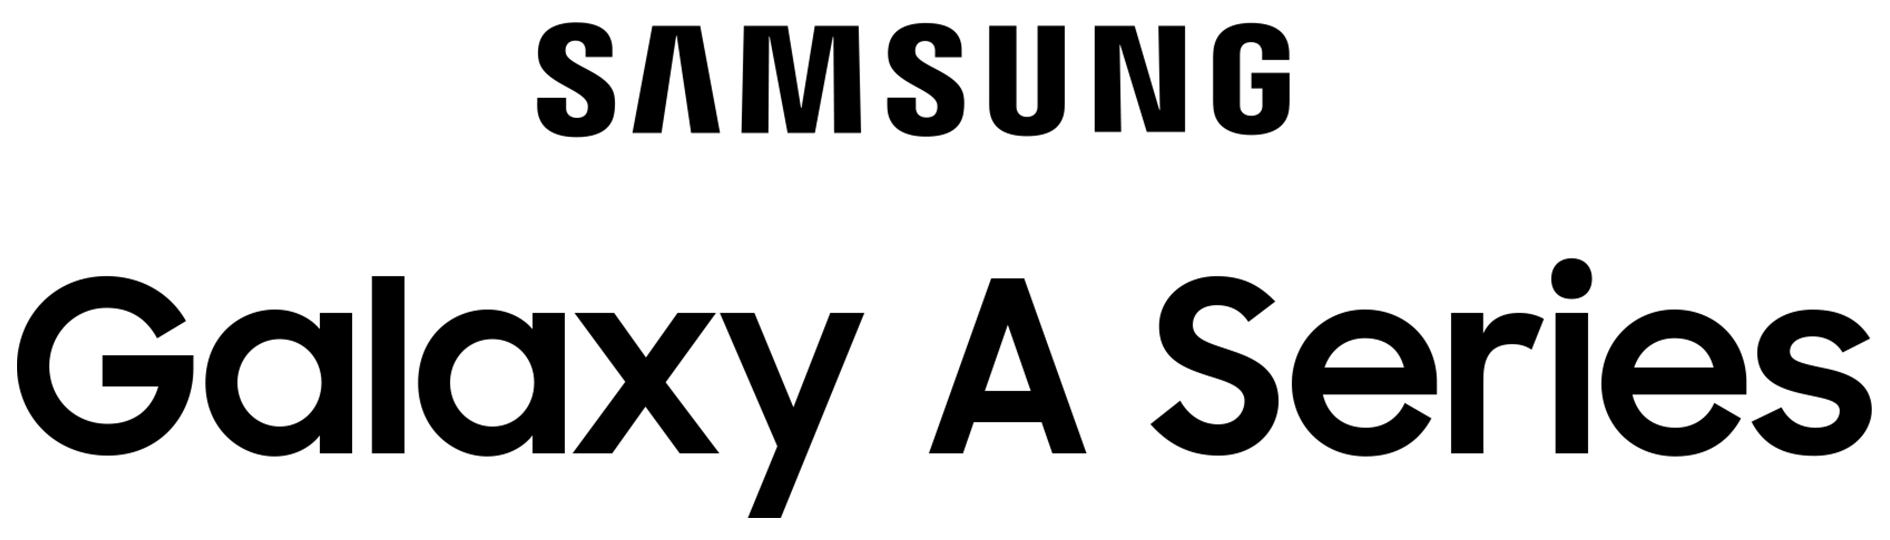 samsung-galaxy-a-series-logo